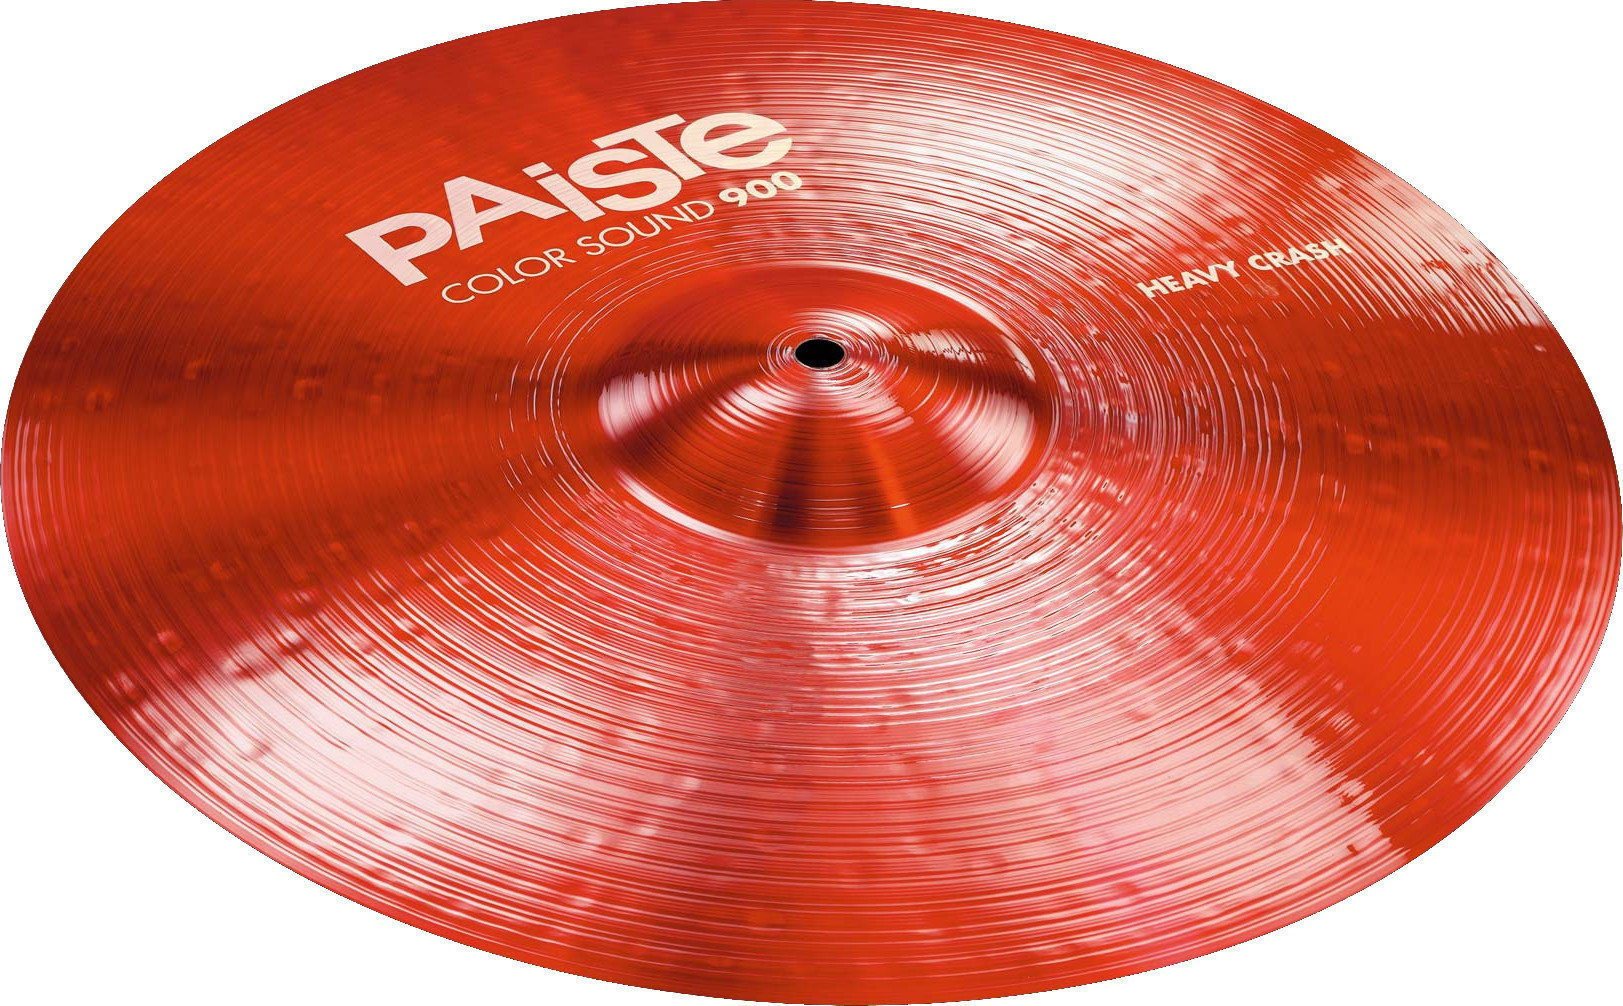 Cymbale crash Paiste Color Sound 900  Heavy Cymbale crash 16" Rouge